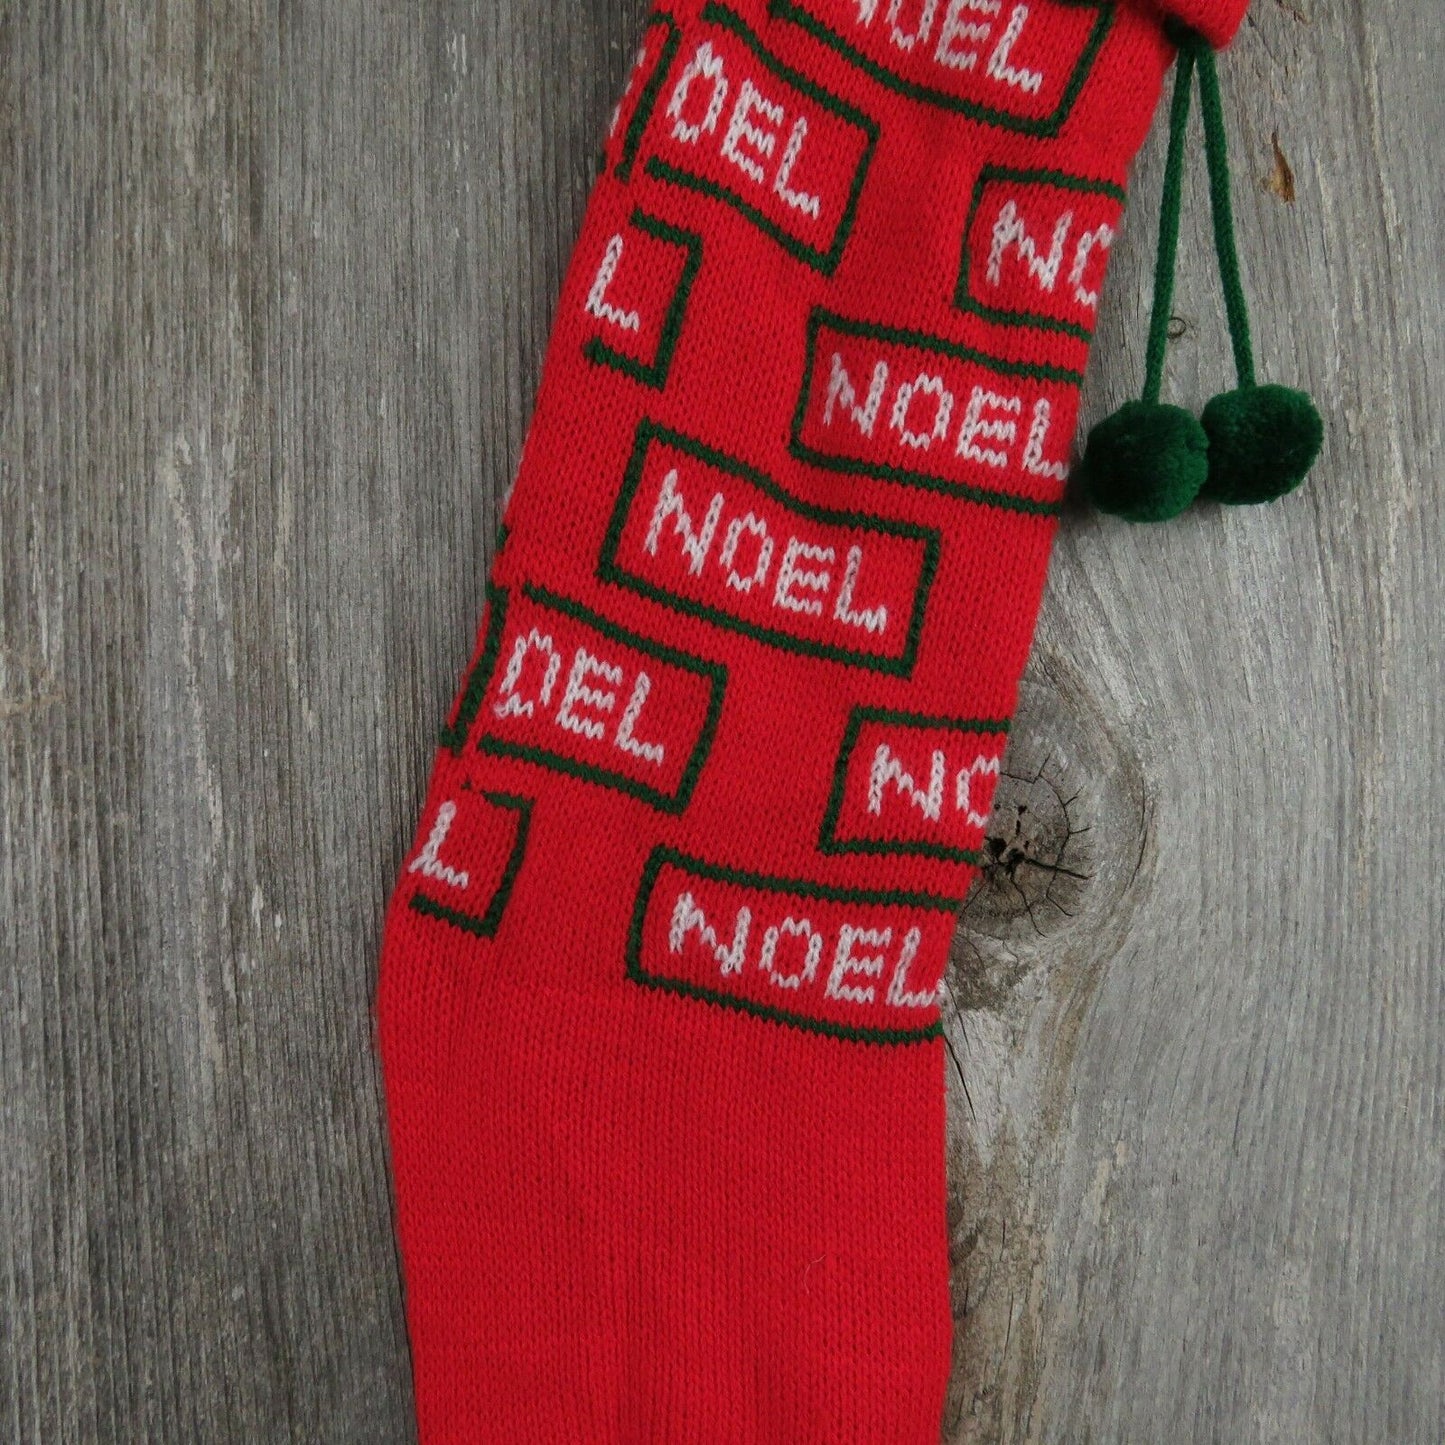 Vintage Noel Heart Stocking Christmas Knitted Knit Green Red White Pom Pom ST64 - At Grandma's Table